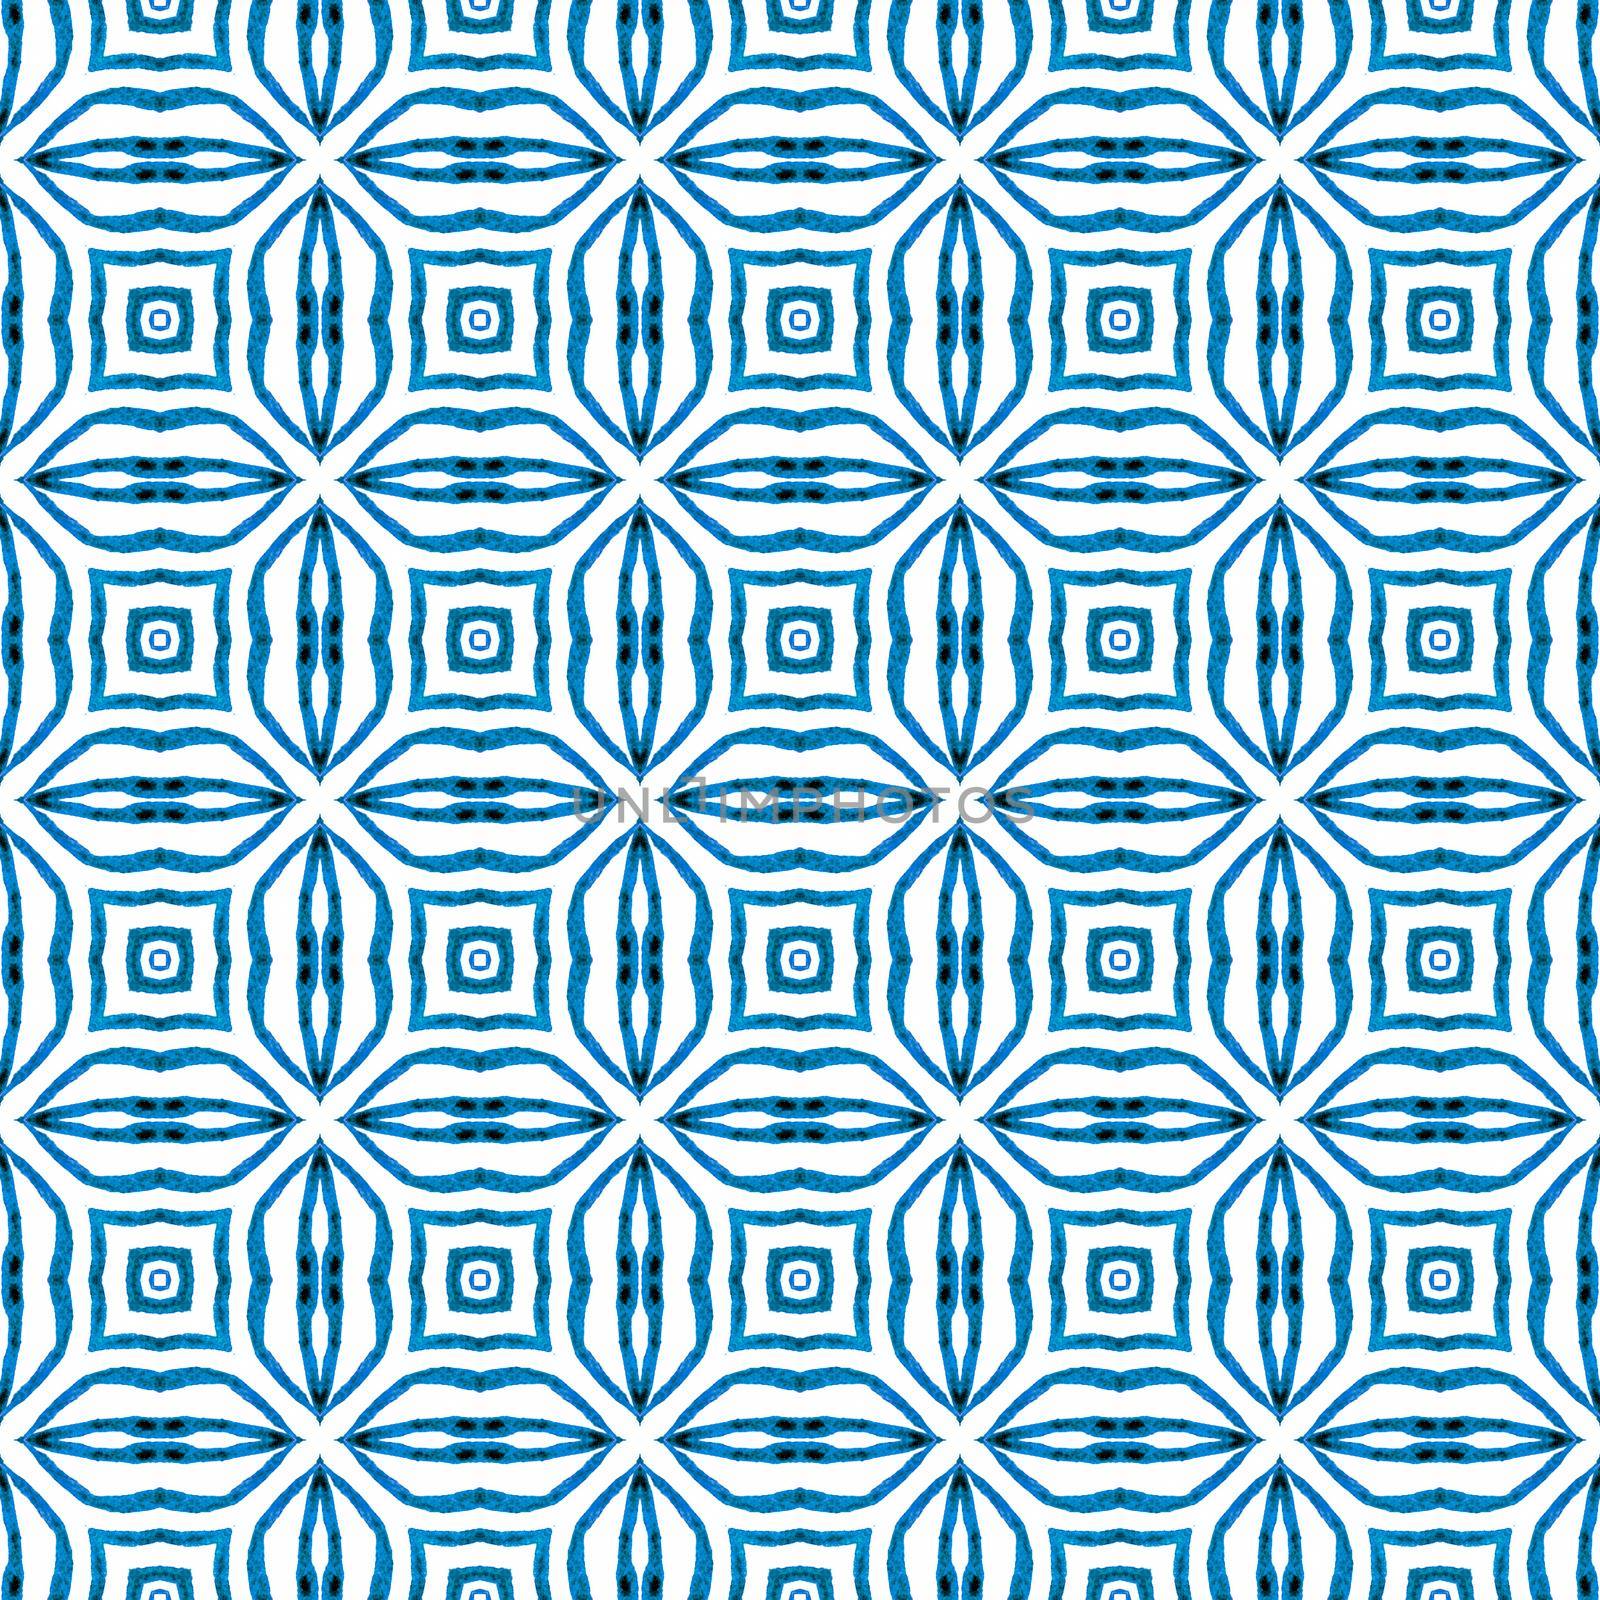 Textile ready mind-blowing print, swimwear fabric, wallpaper, wrapping. Blue splendid boho chic summer design. Arabesque hand drawn design. Oriental arabesque hand drawn border.